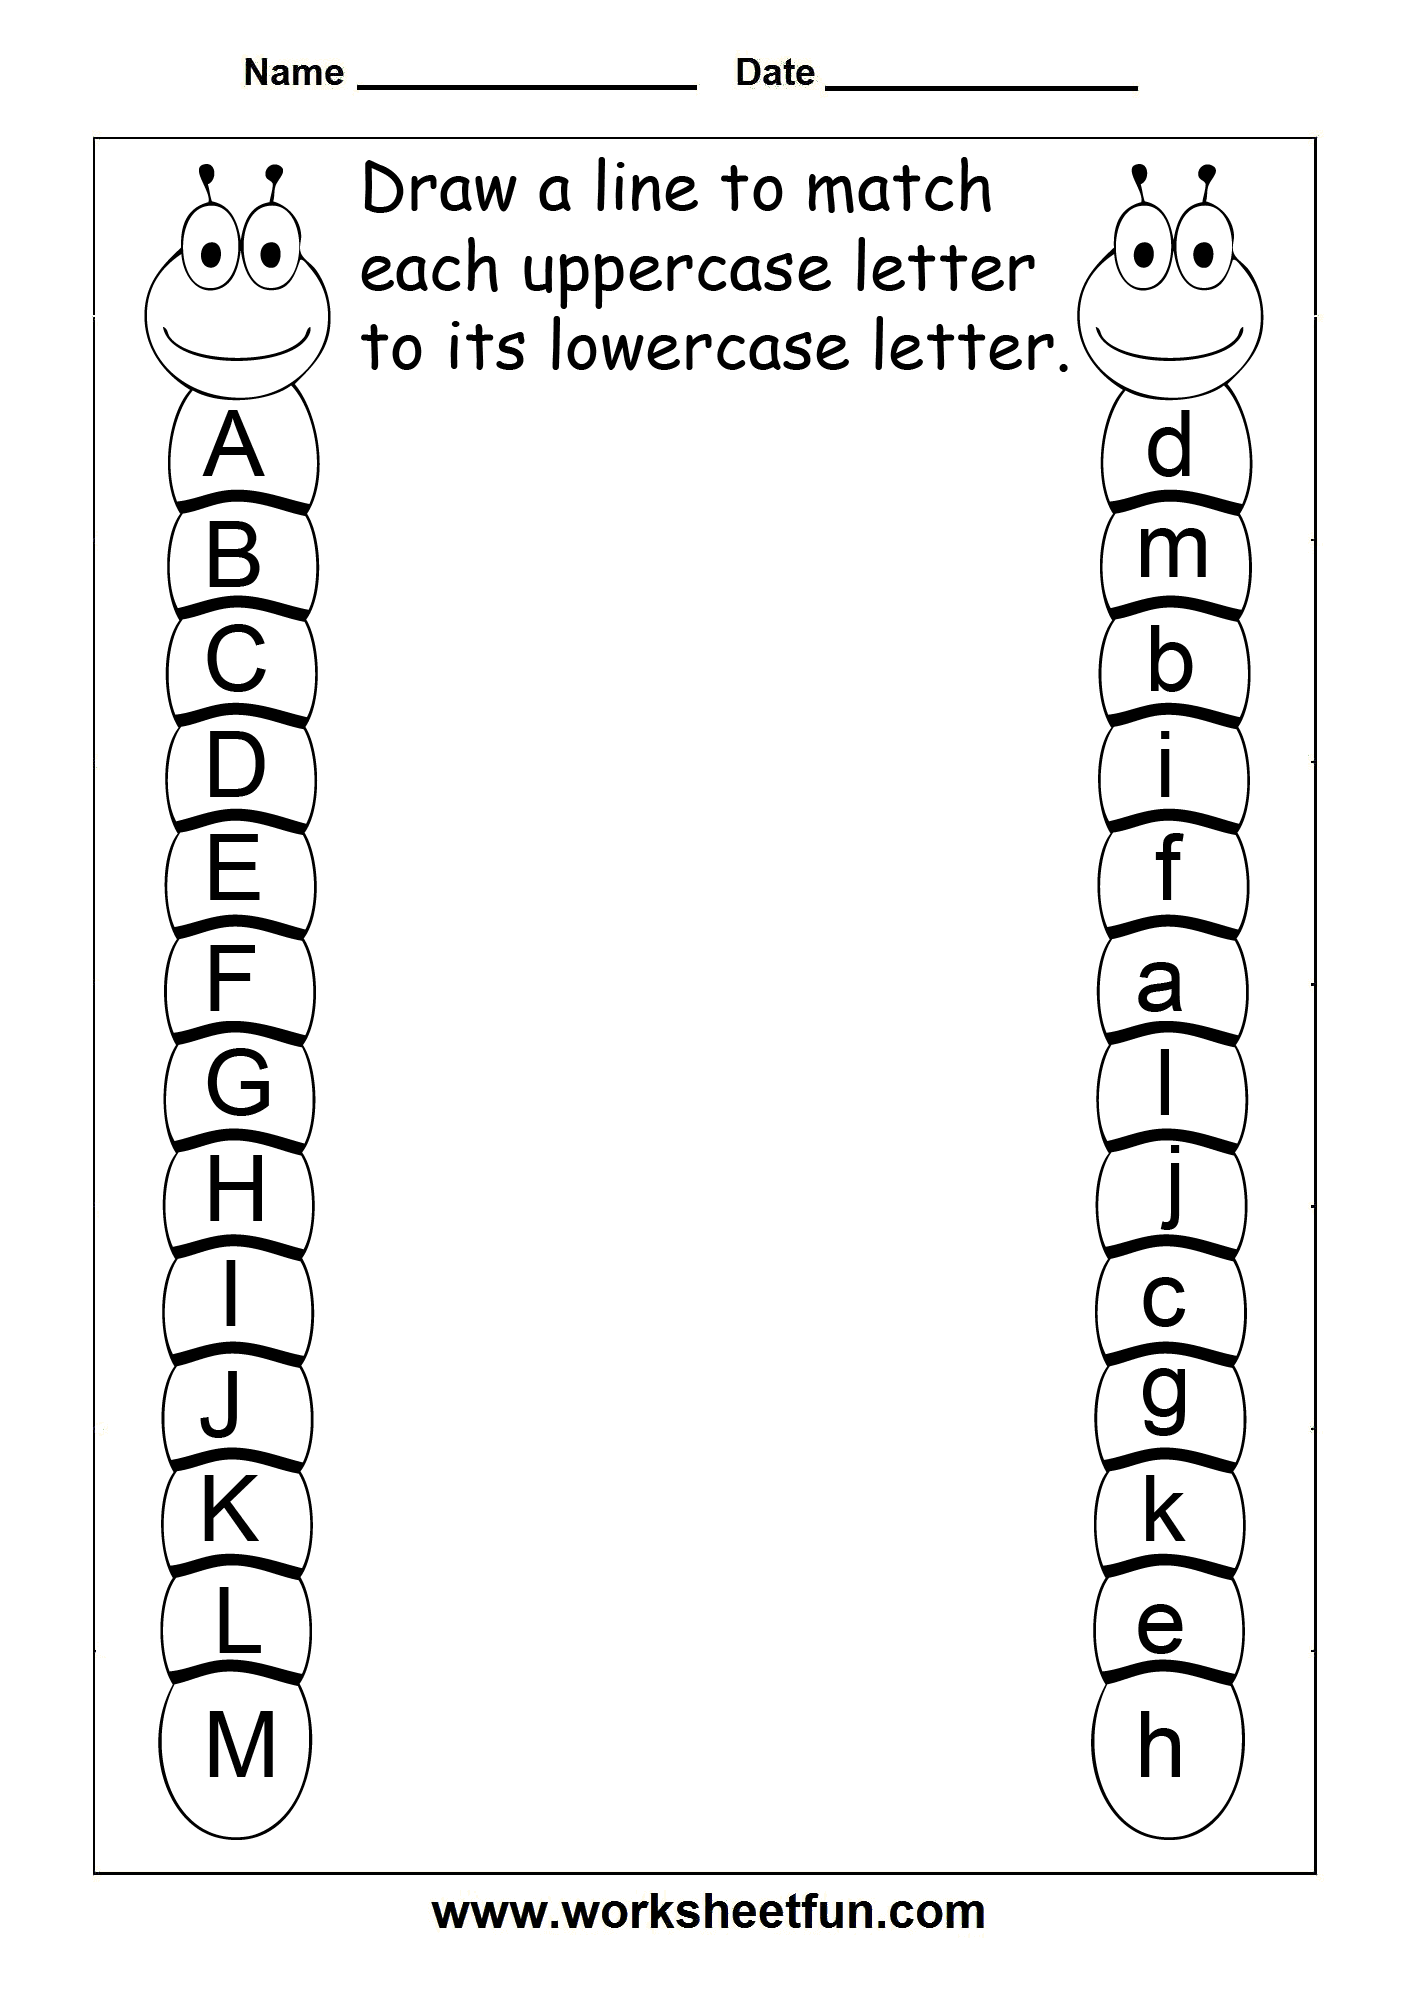 Uppercase Lowercase Letters Worksheet Image